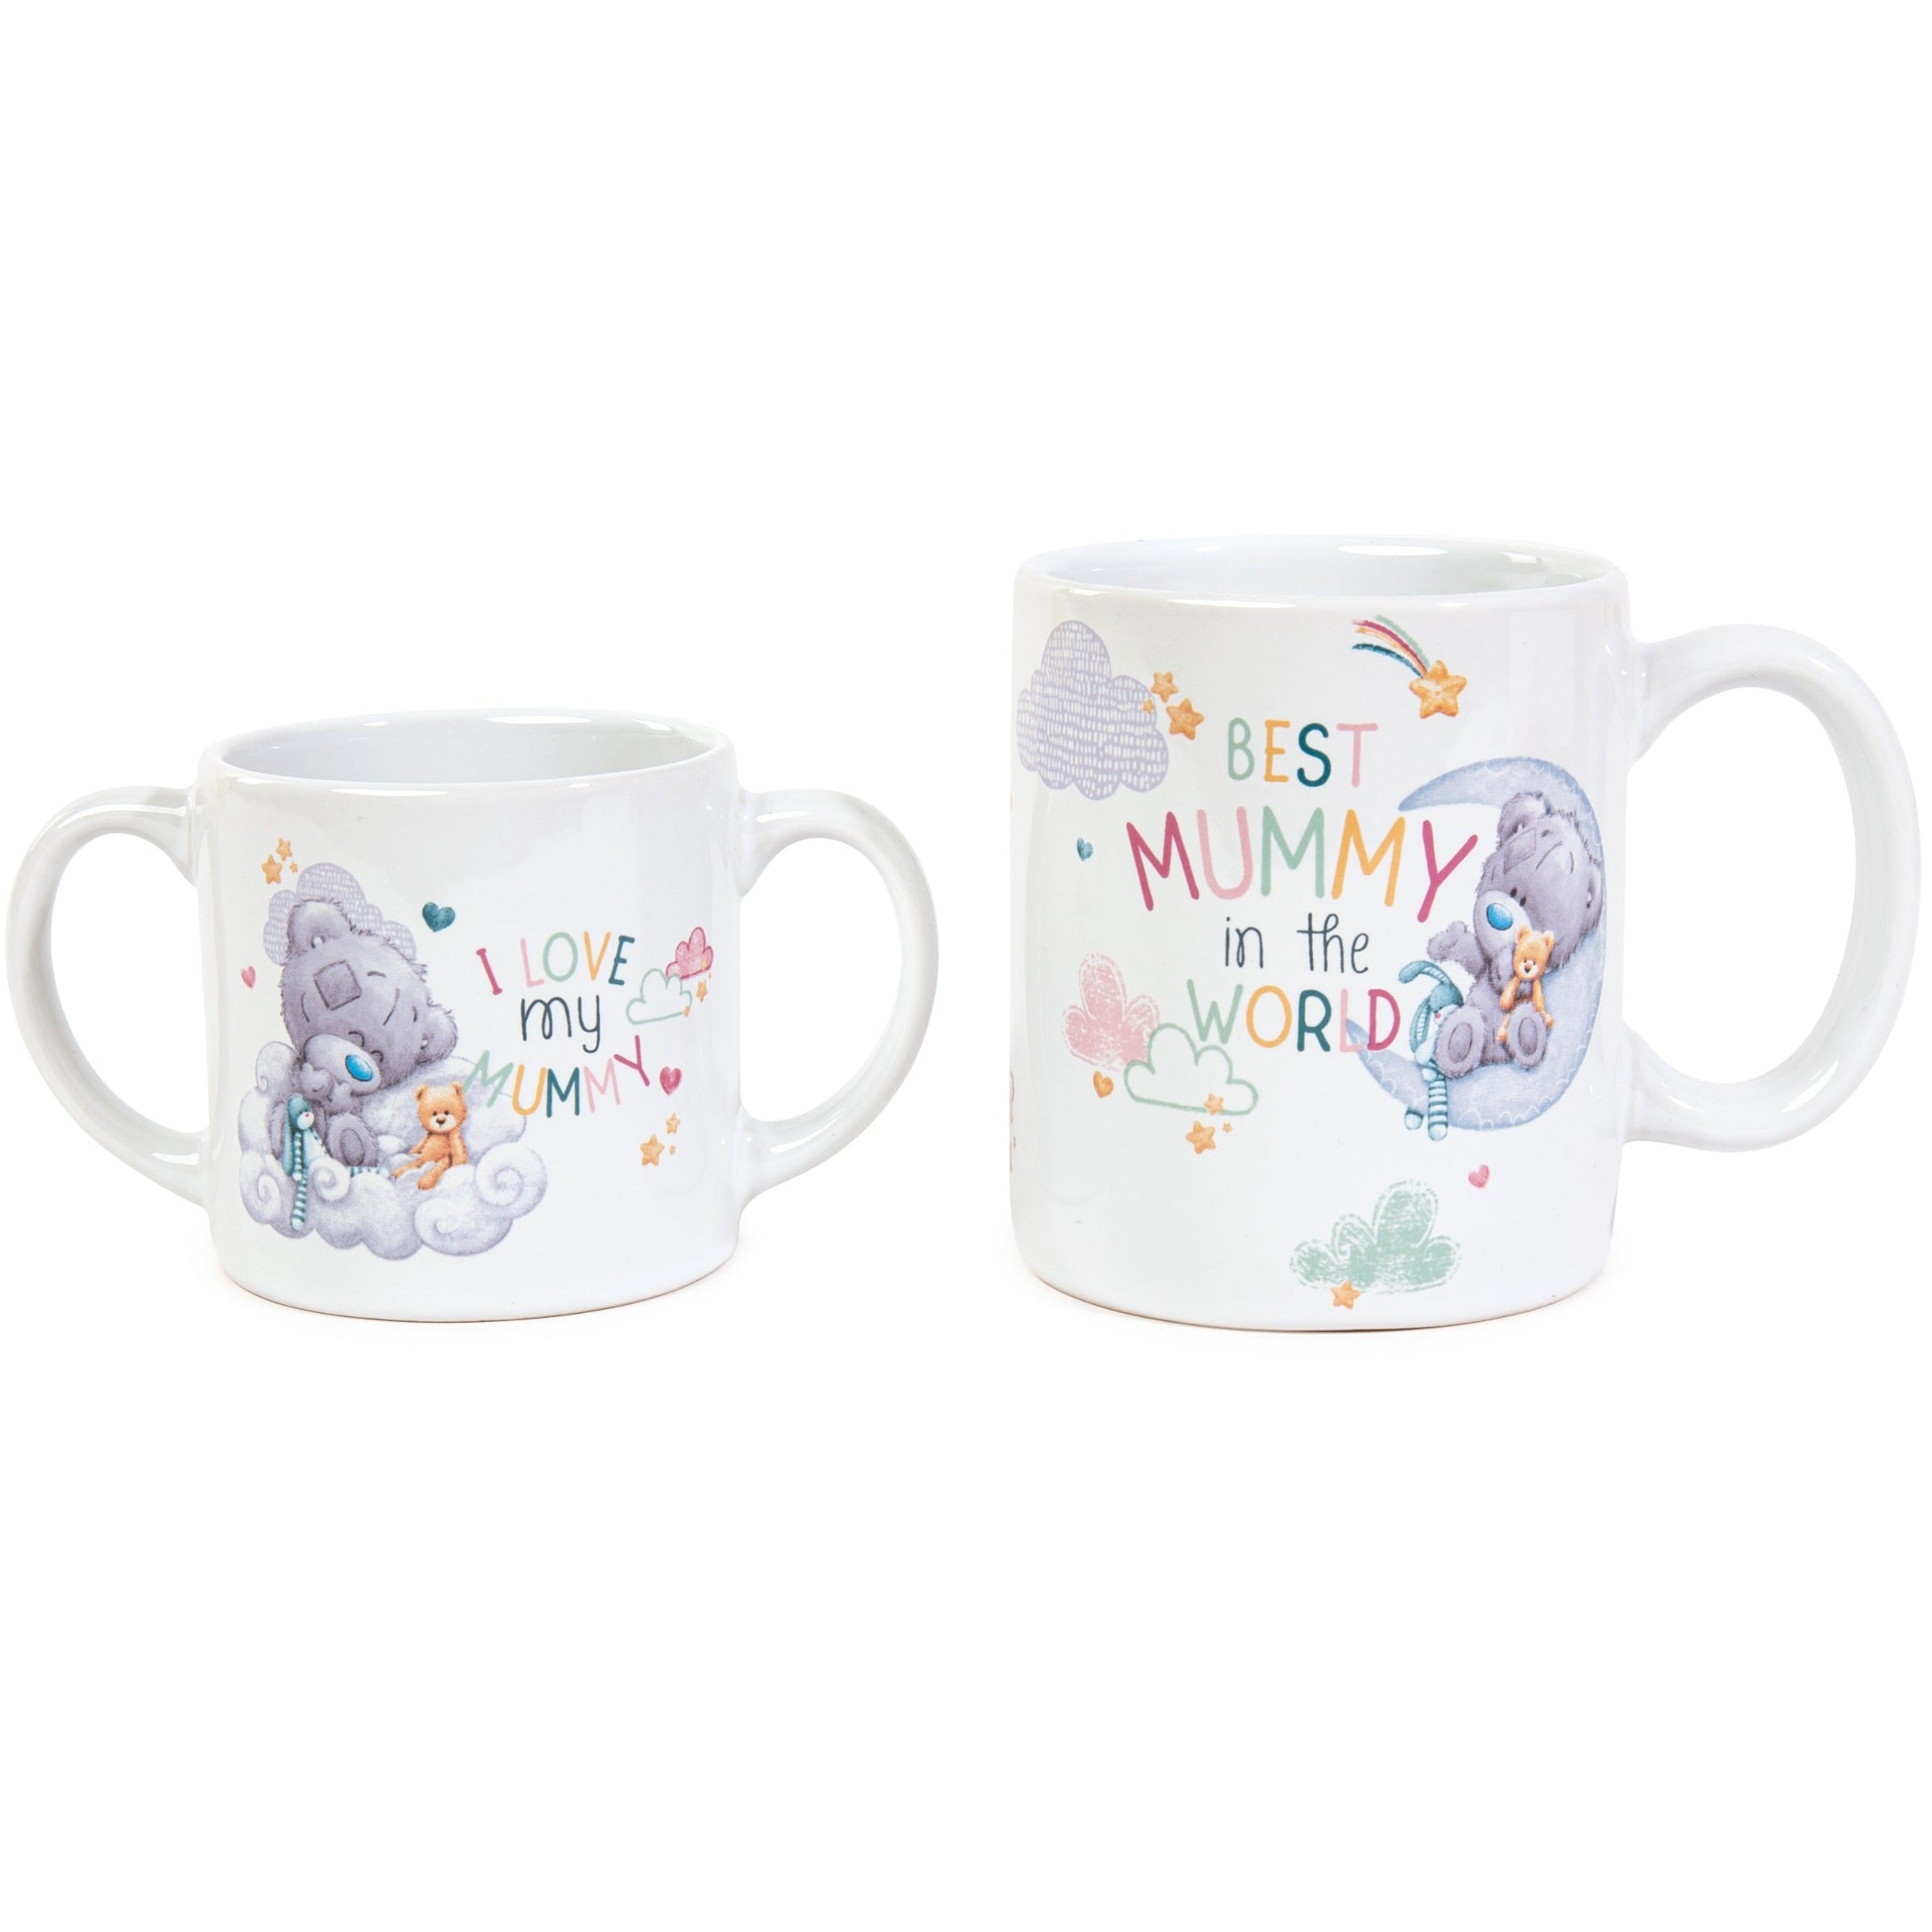 Mummy & Baby Tiny Tatty Teddy Mugs Gift Set